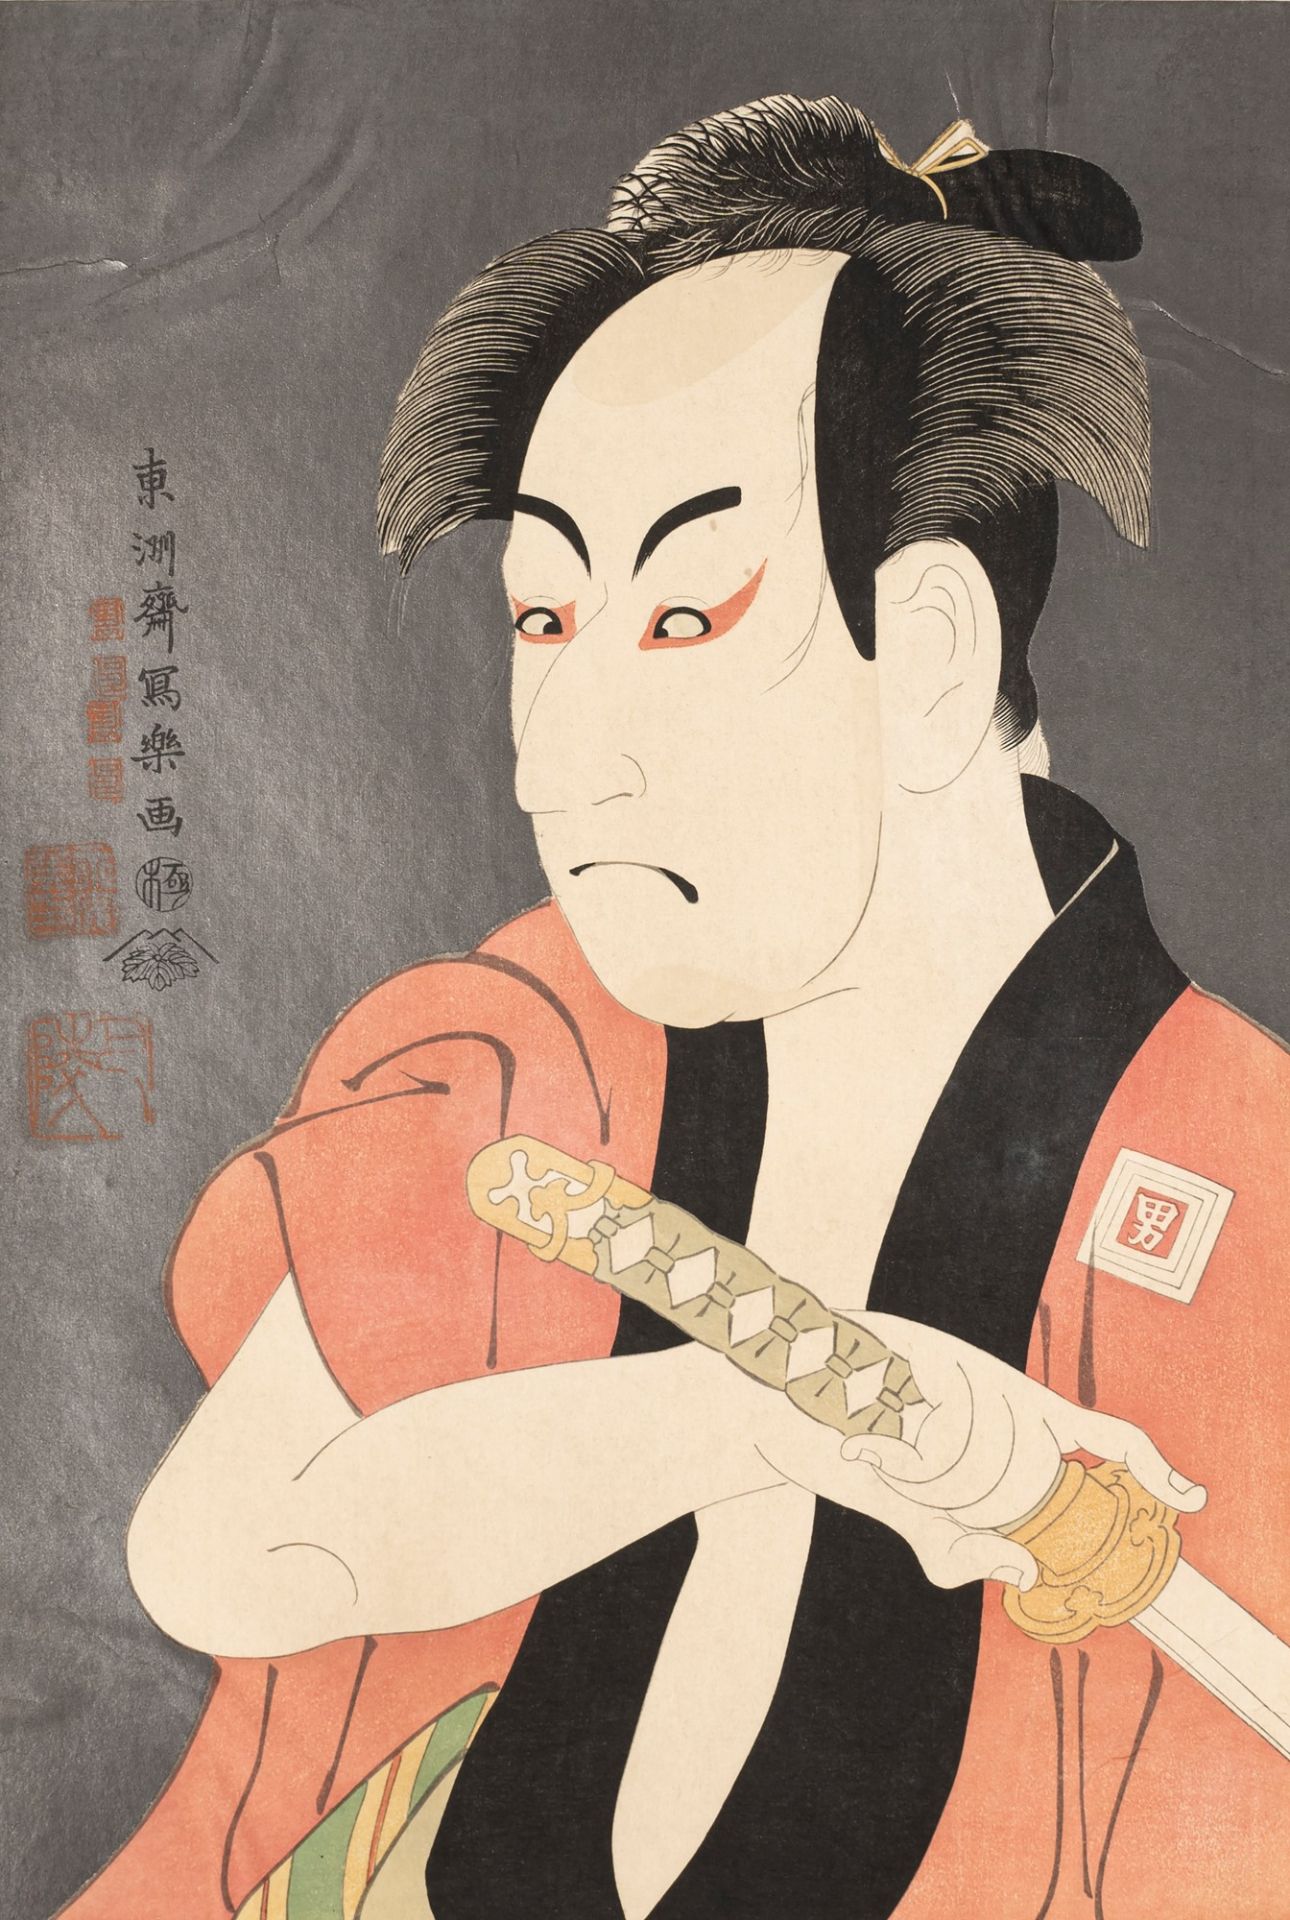 Sharaku - Five woodcuts representing theatrical masks, Japan, Taisho period - Image 3 of 5